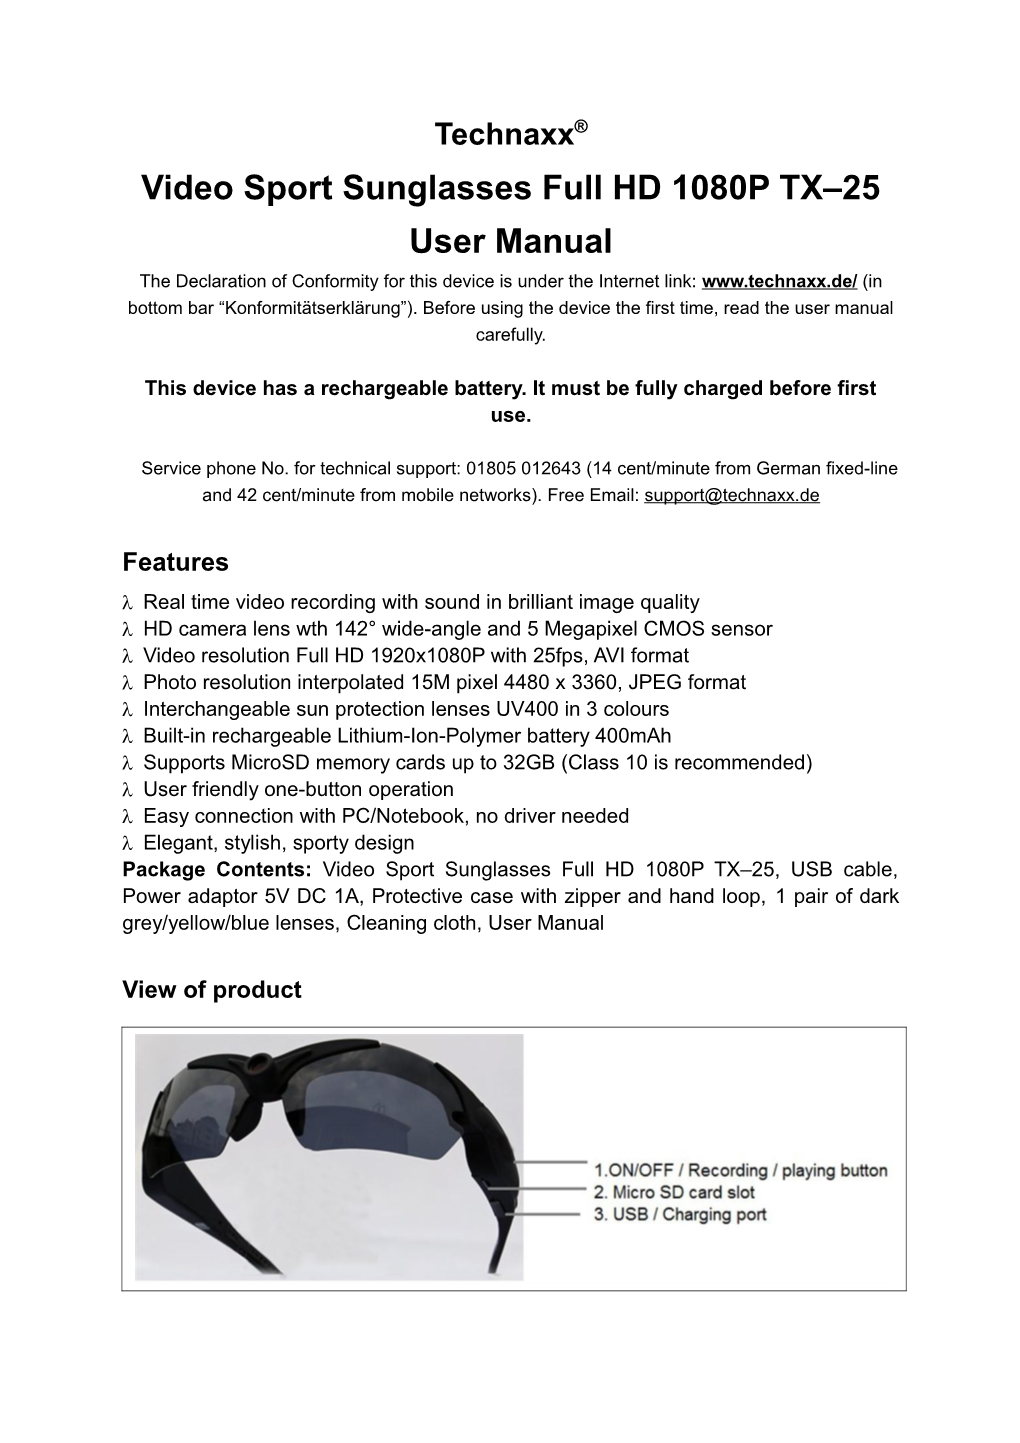 Video Sport Sunglasses Full HD 1080P TX 25 User Manual